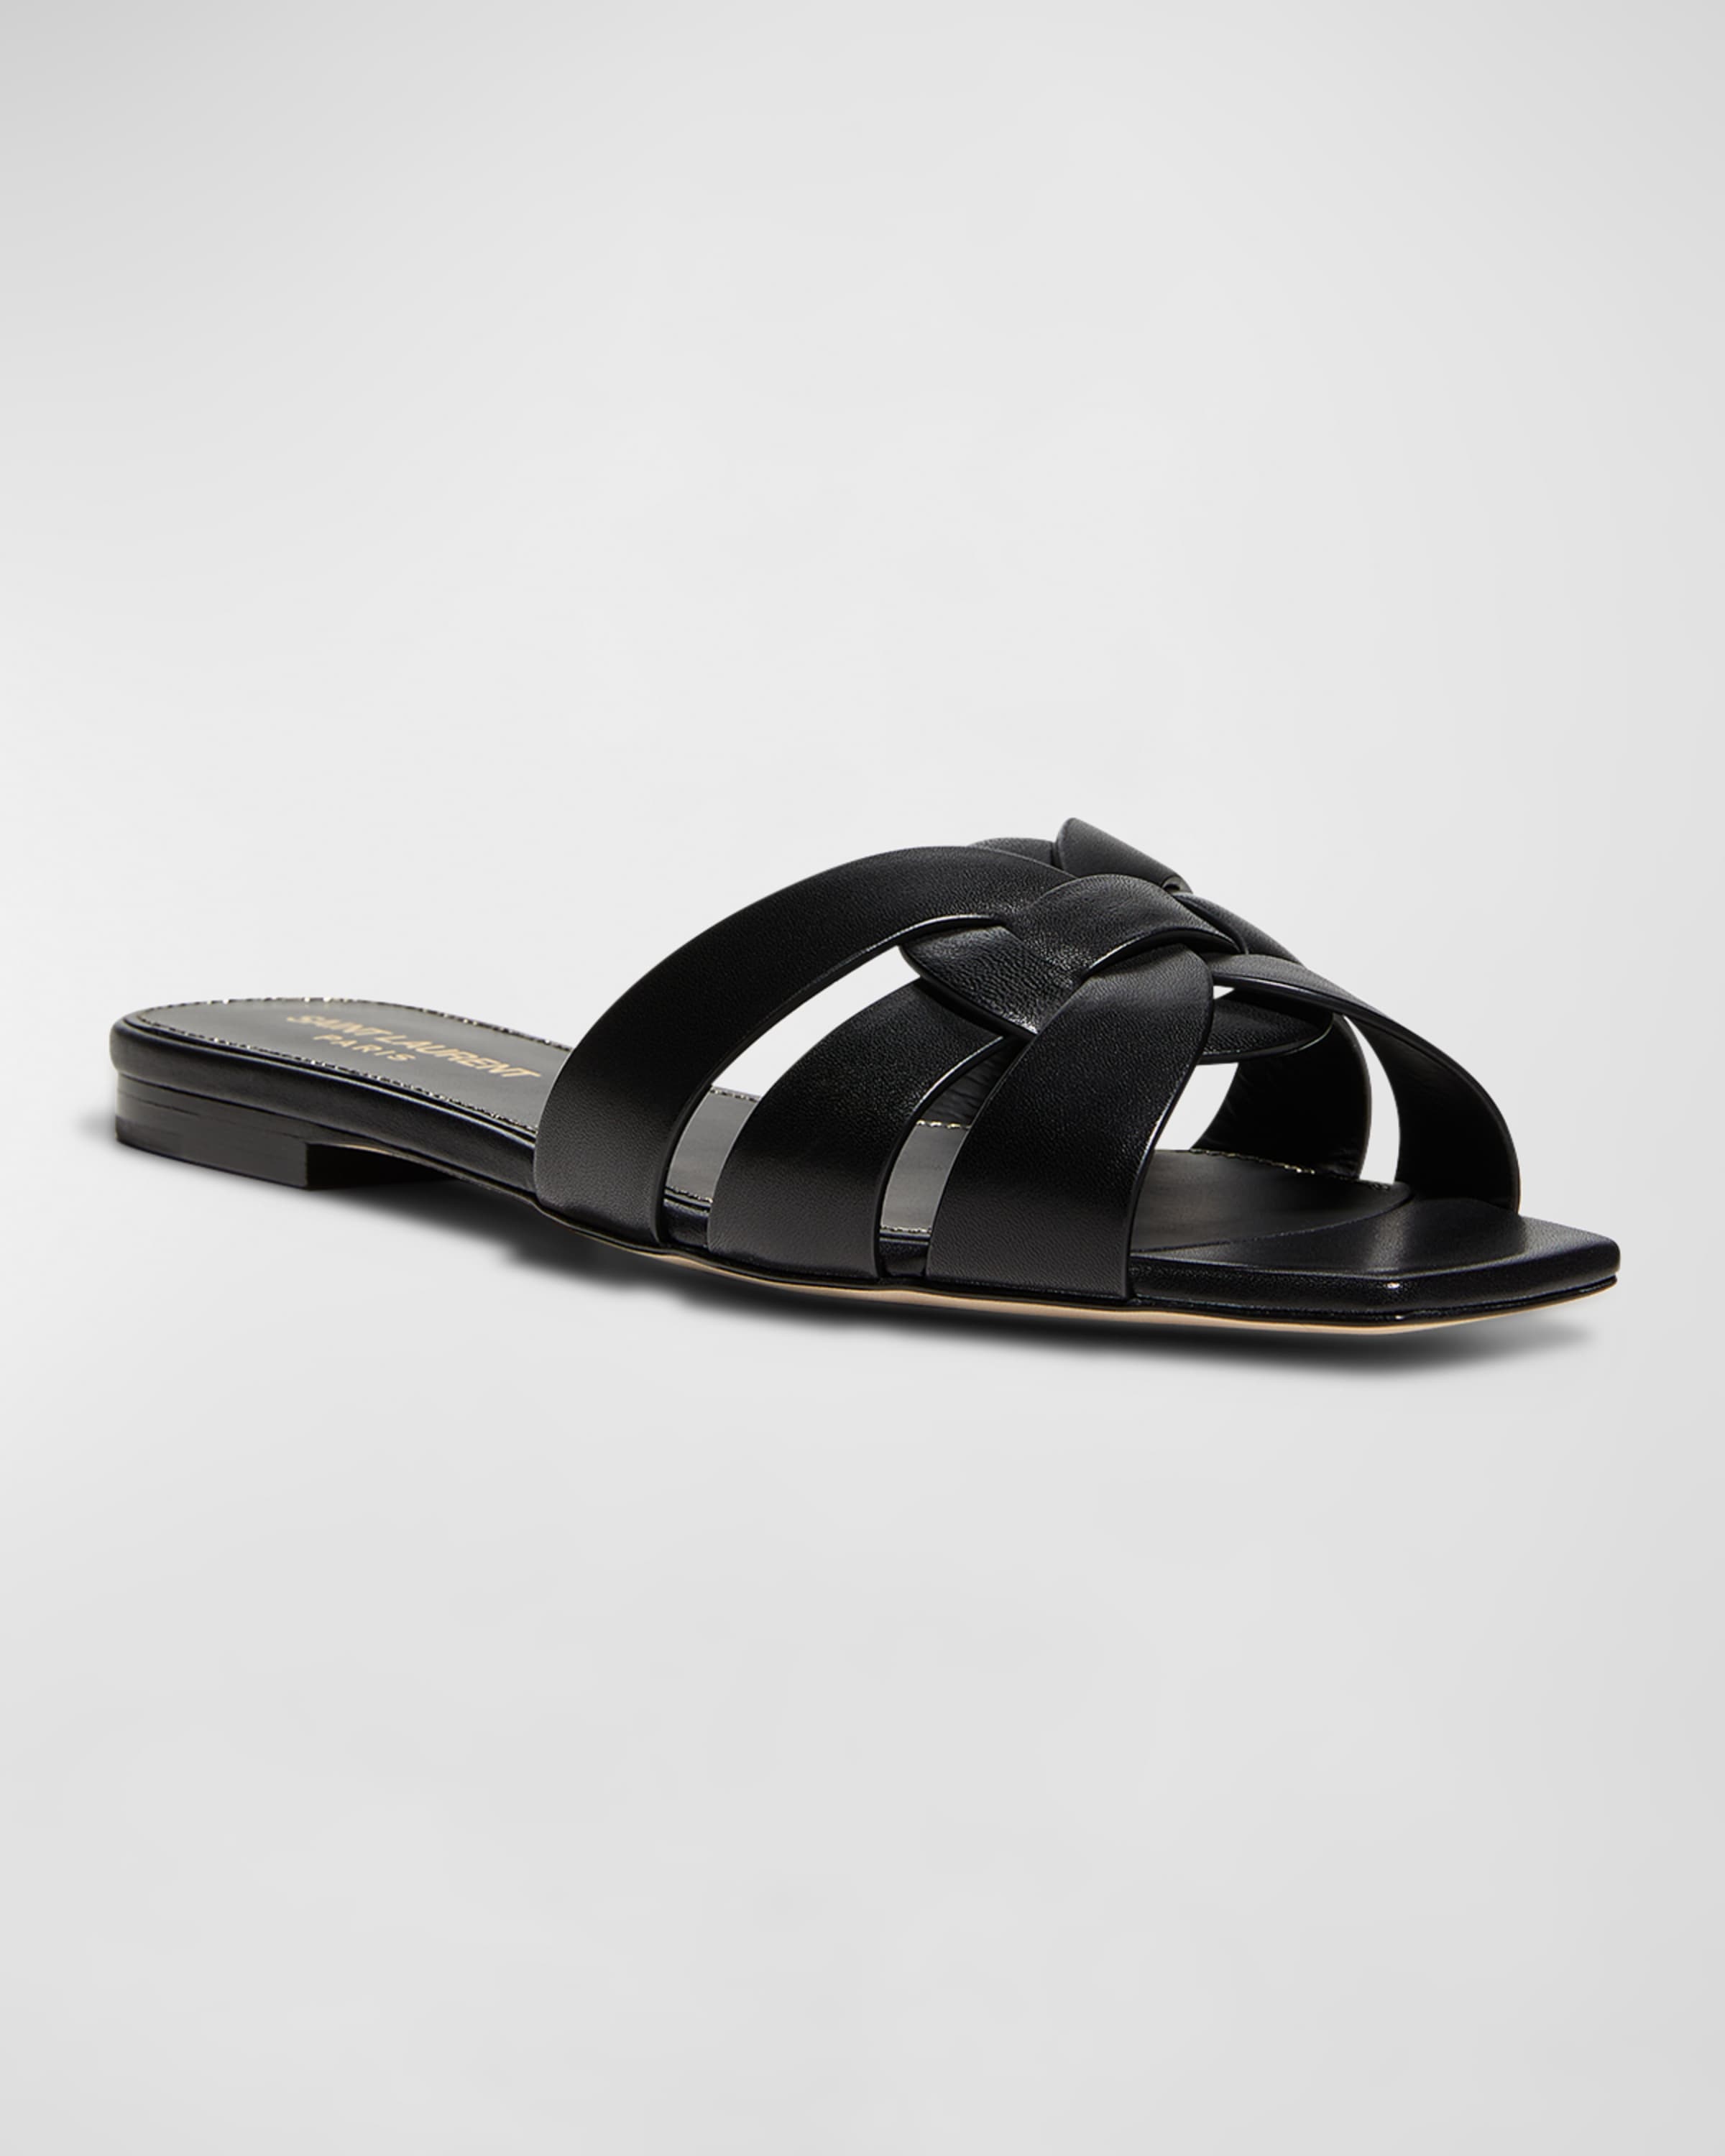 Woven Leather Sandal Slide - 2